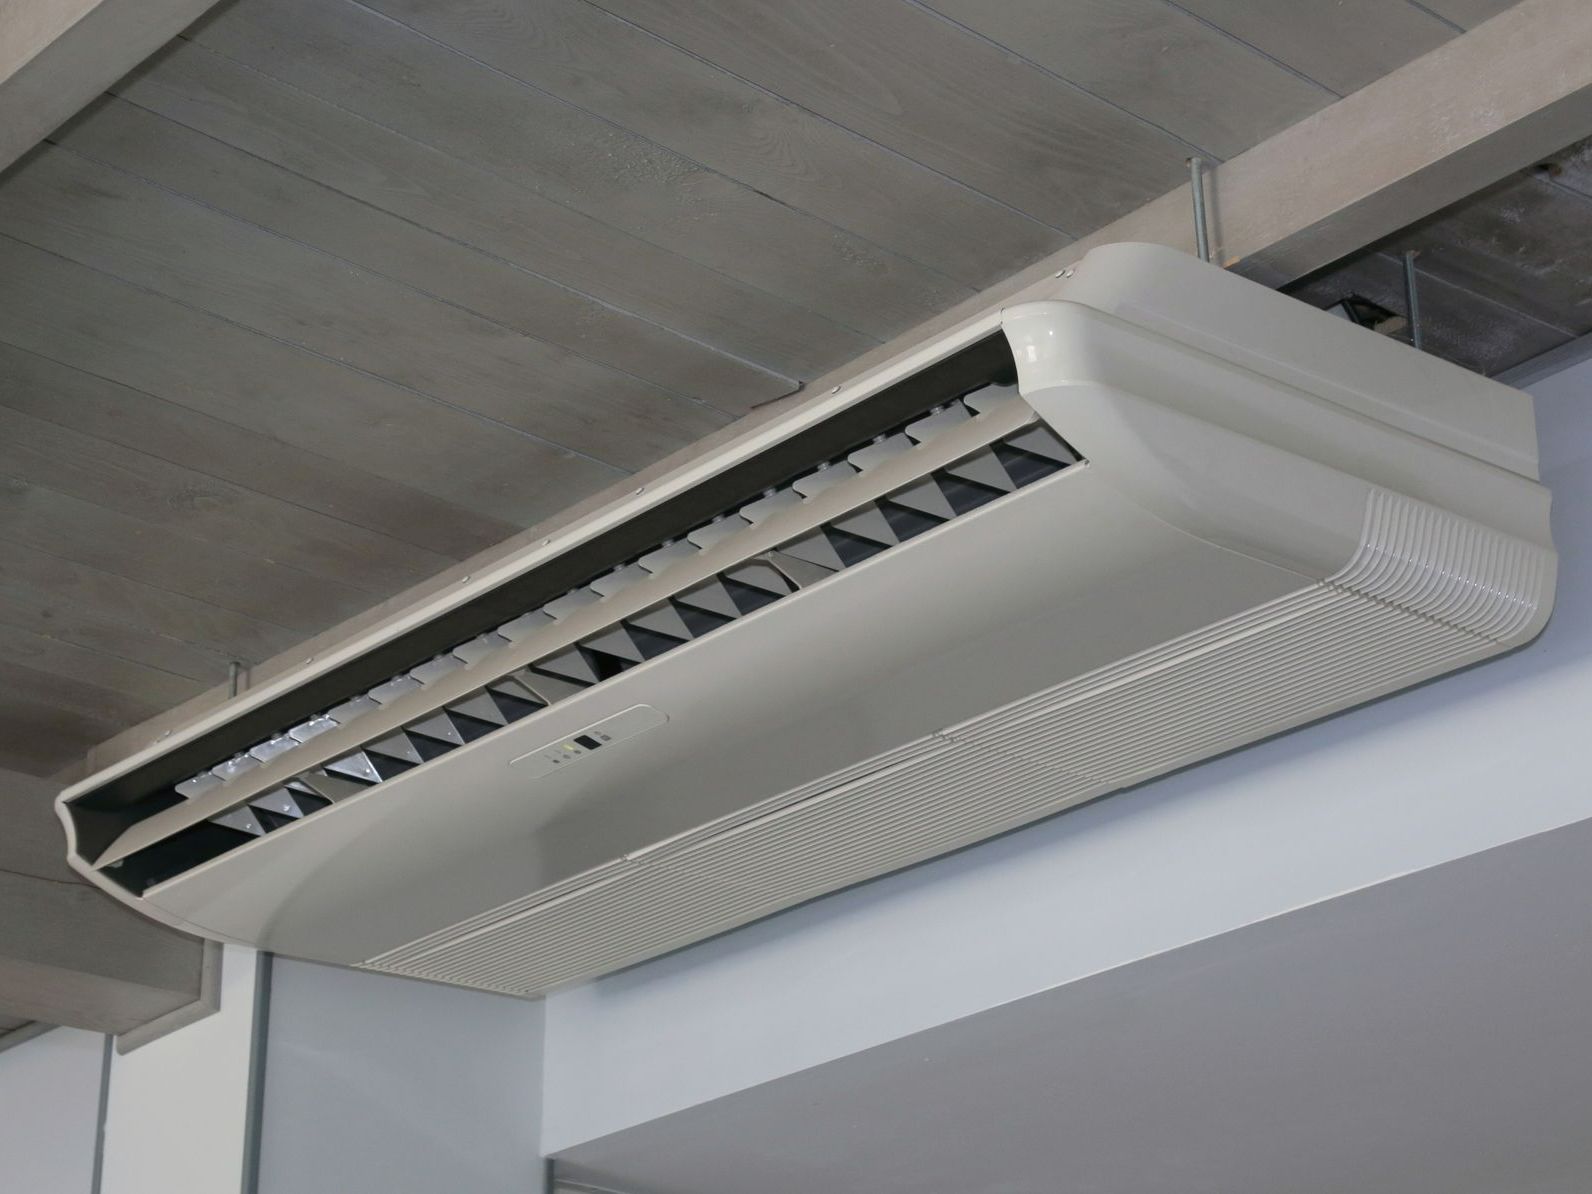 Climatisation installée au plafond